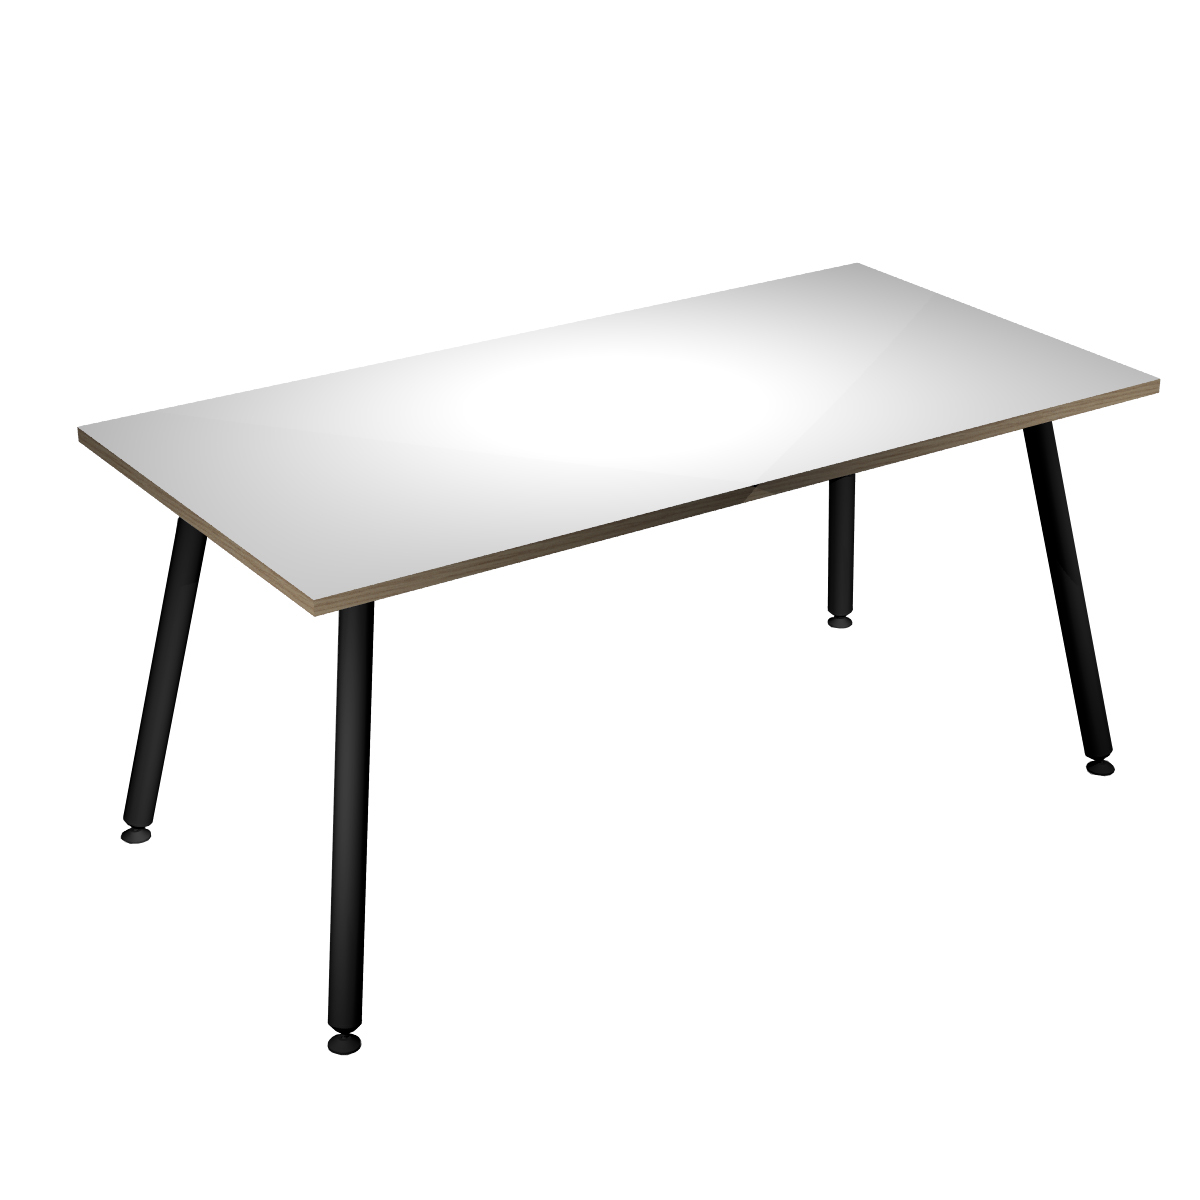 Table haute LEONARDO - 120 x 80 x 105 cm - Pieds métal noirs - Blanc chants chêne